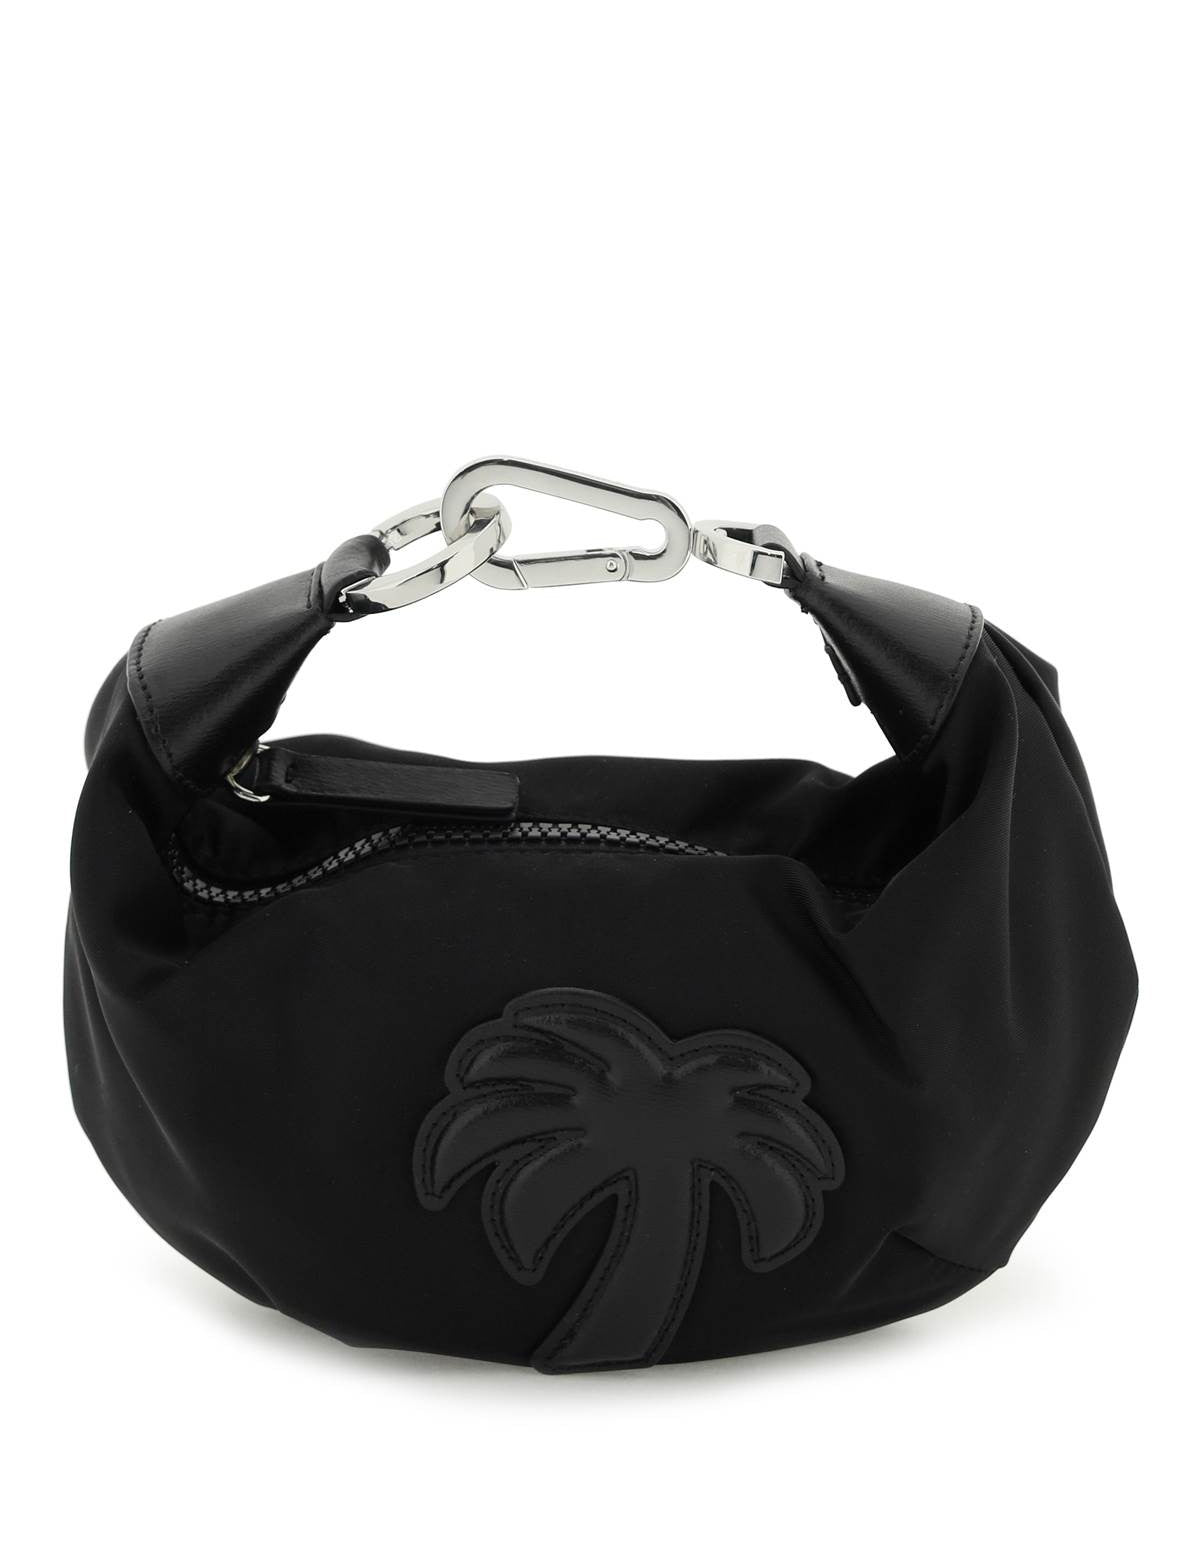 palm-angels-hobo-palm-mini-handbag.jpg